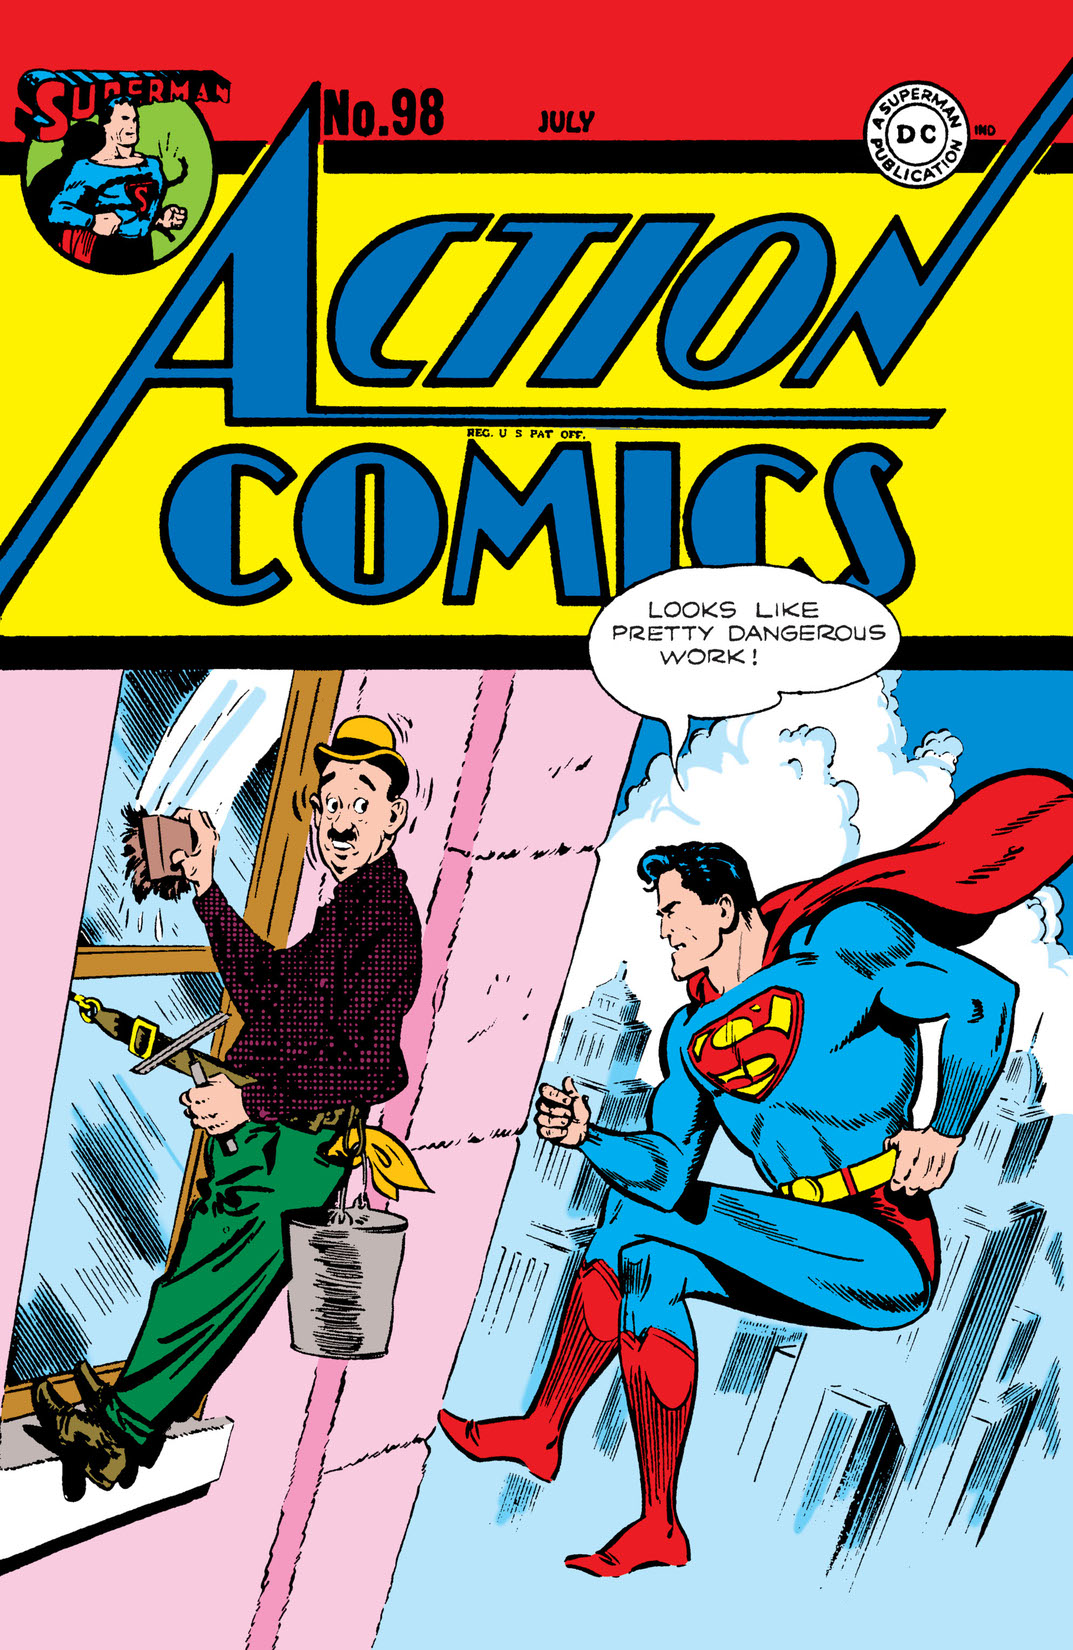 Action Comics (1938-) #98 preview images